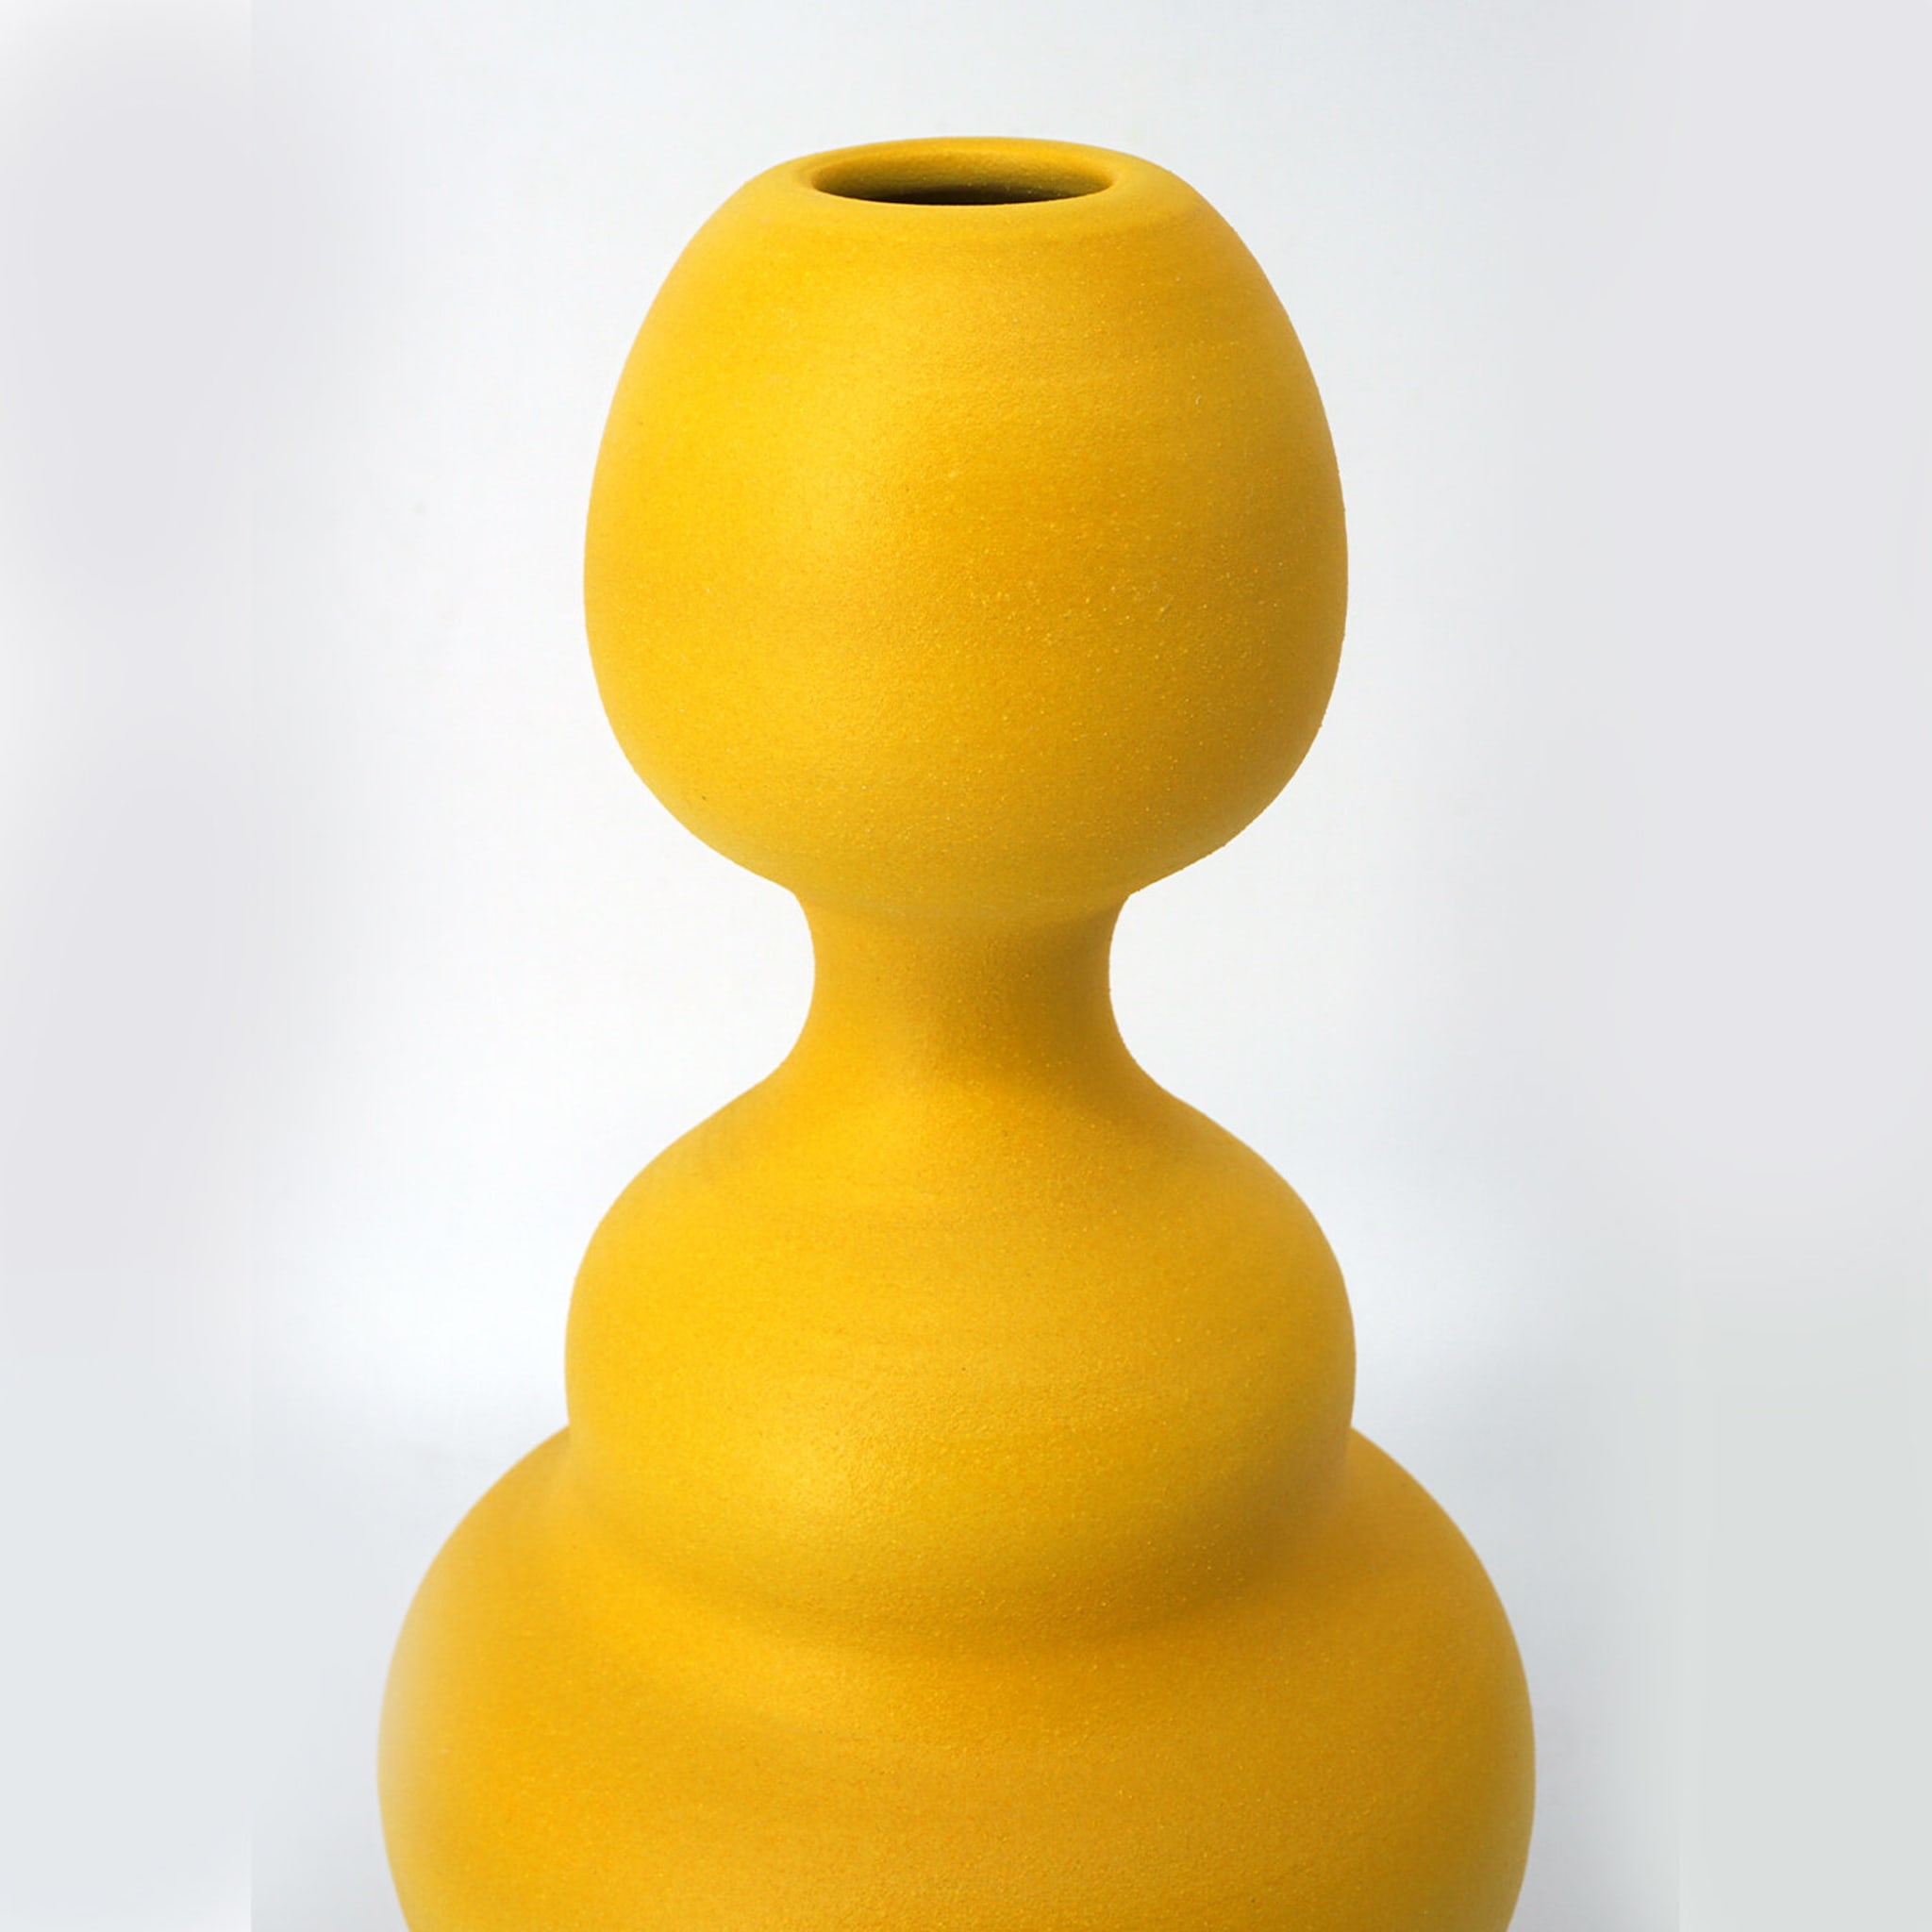 Crisalide Yellow Vase #7 - Alternative view 1